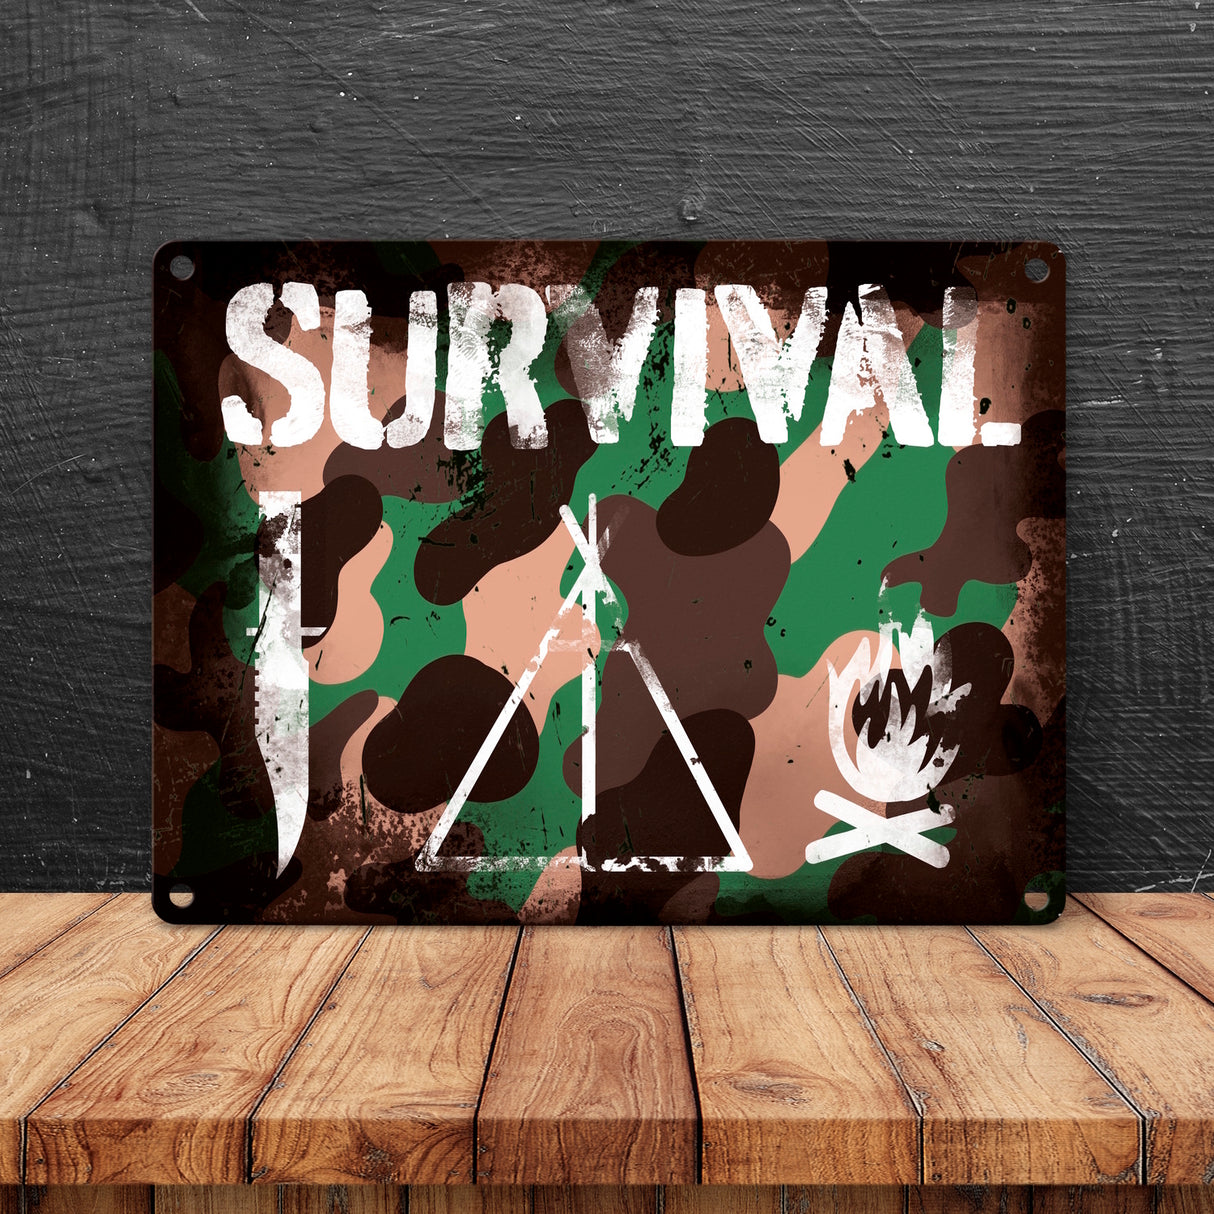 Survival Tarnmuster Metallschild im Used-Look